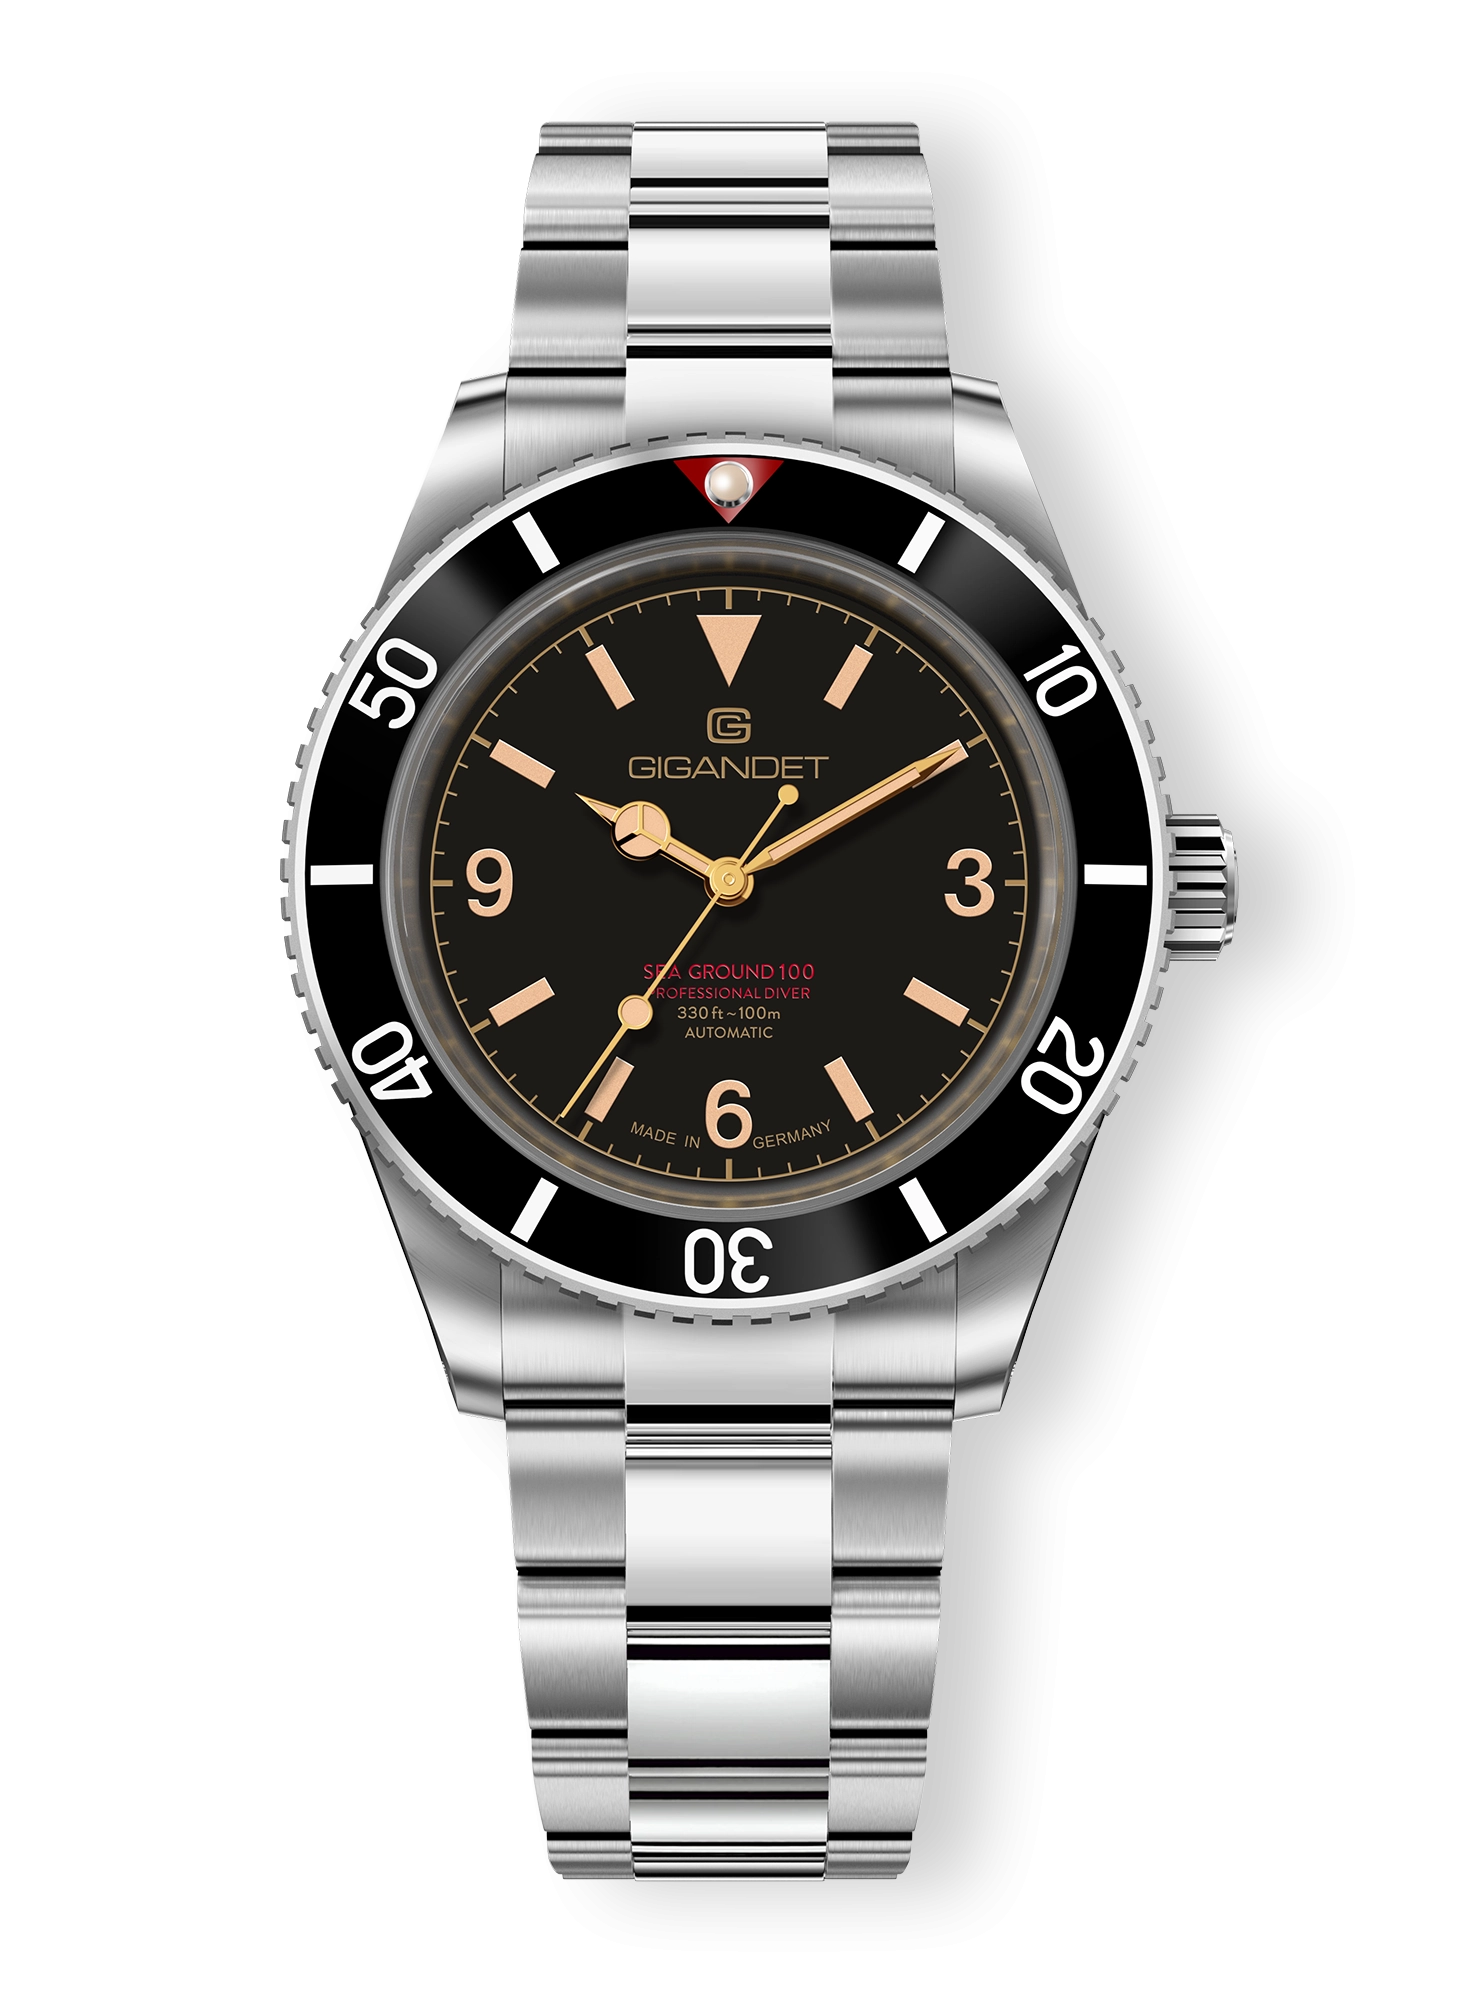 Automatic watch Sea Ground 100 - G100-001M